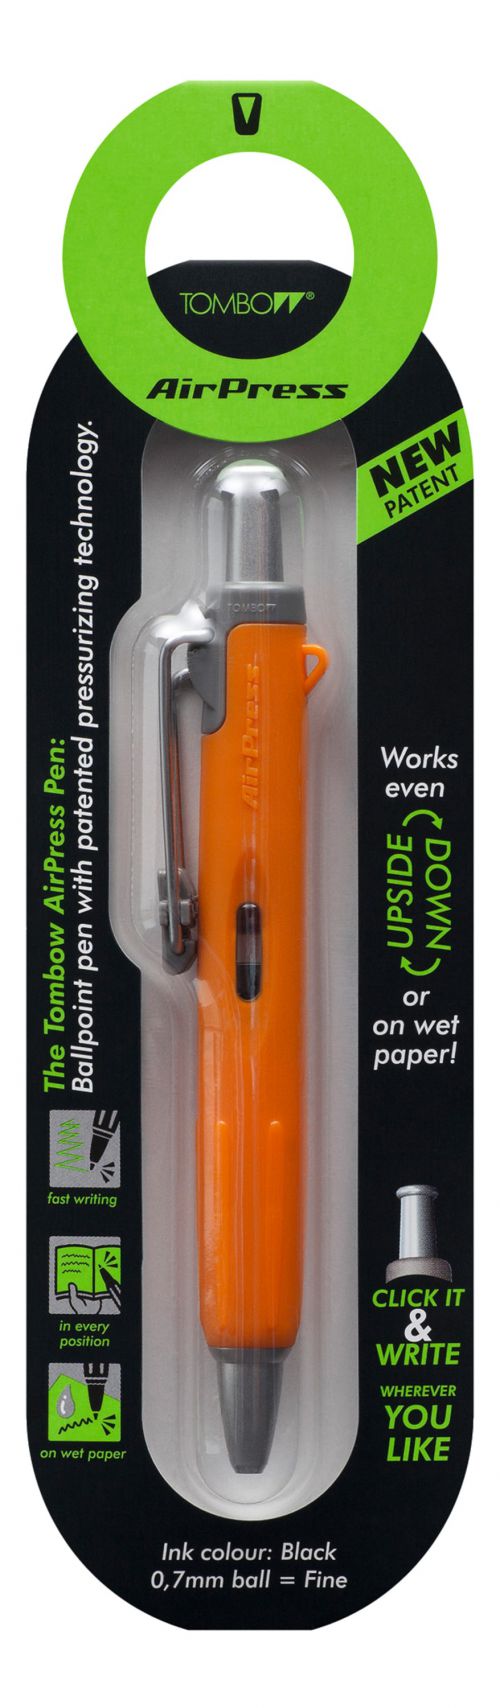 Tombow Ballpoint AirPress Pen Orange Barrel Black Ink BC-AP54